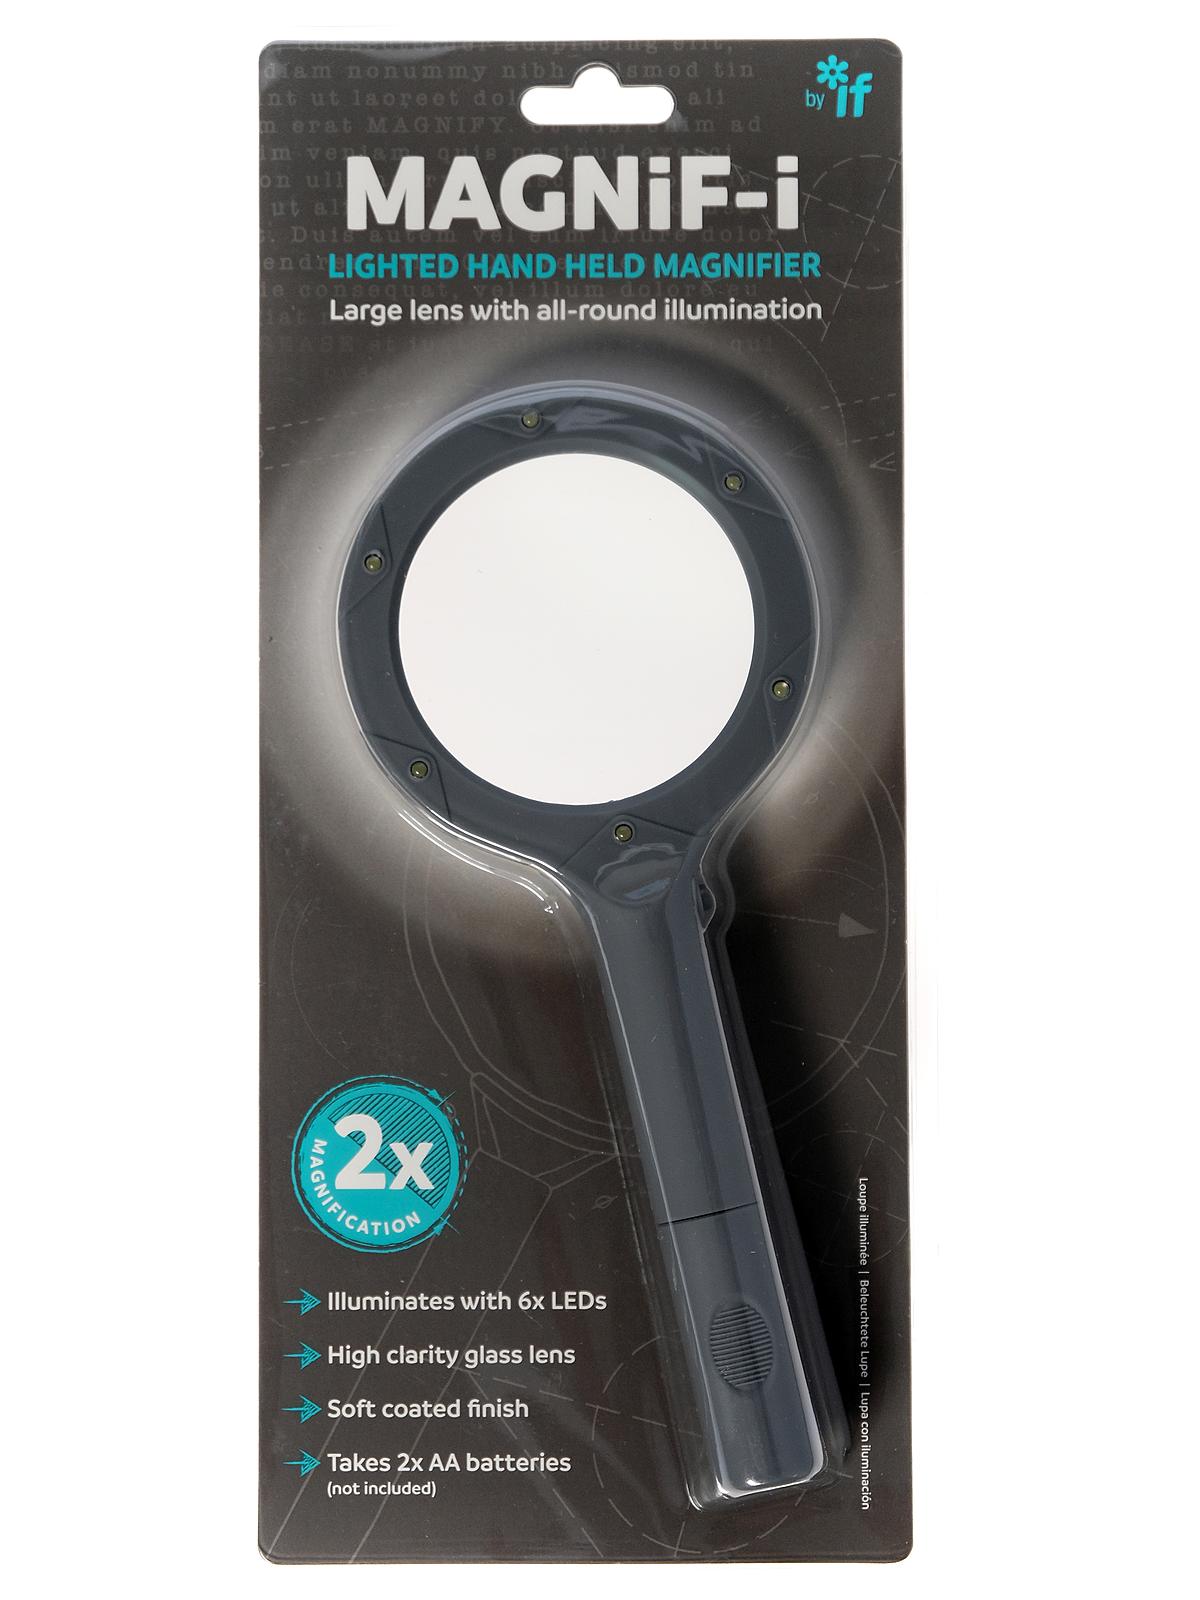 IF USA - Magnif-I Optical Range